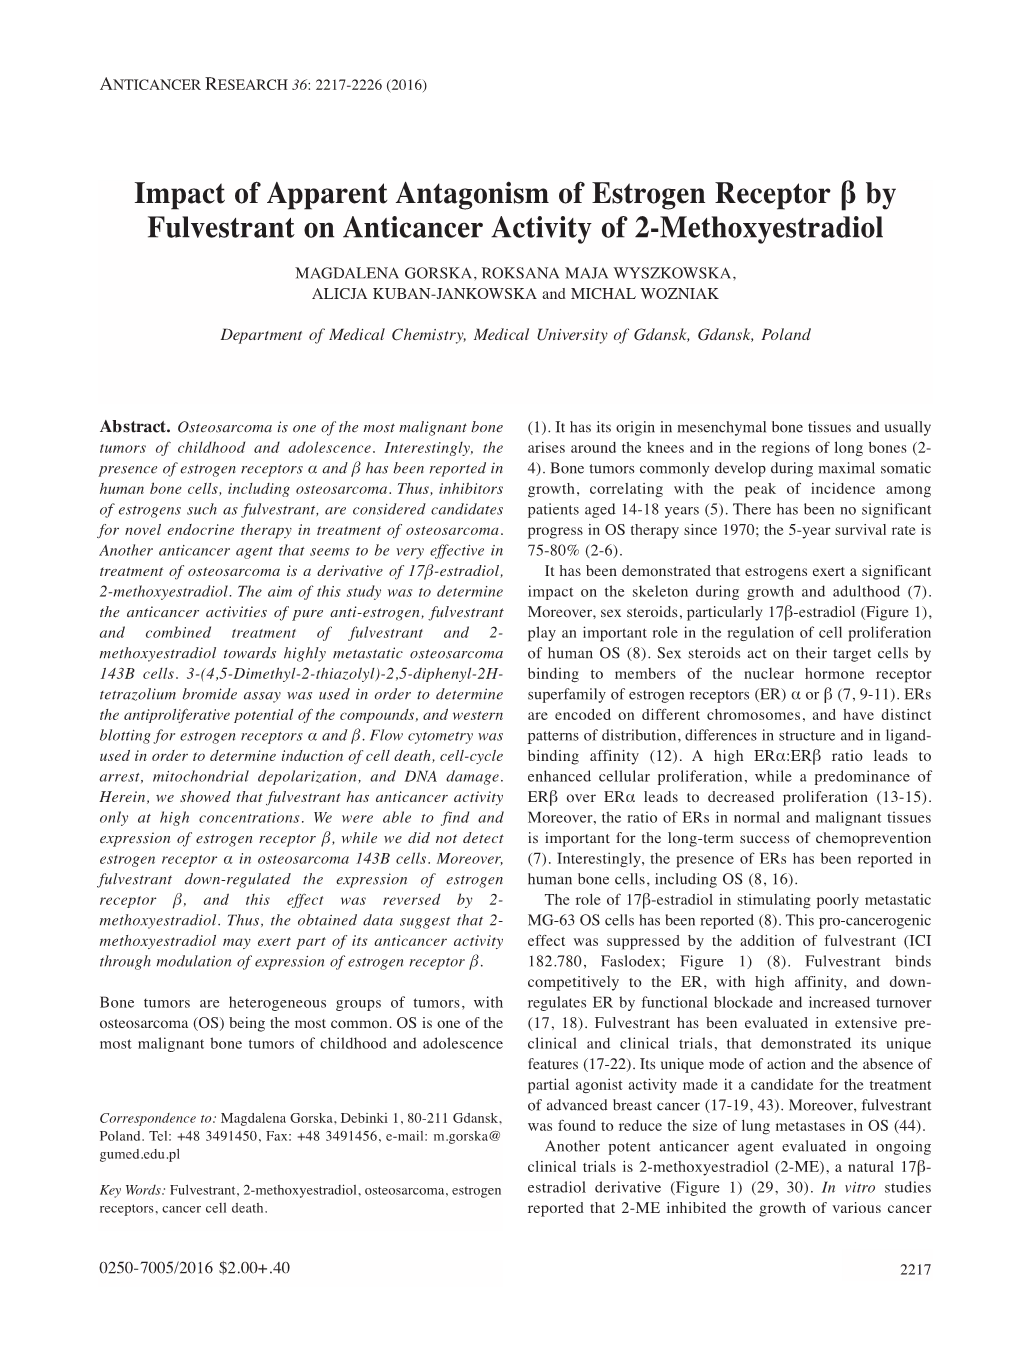 Impact of Apparent Antagonism of Estrogen Receptor Β by Fulvestrant on Anticancer Activity of 2-Methoxyestradiol